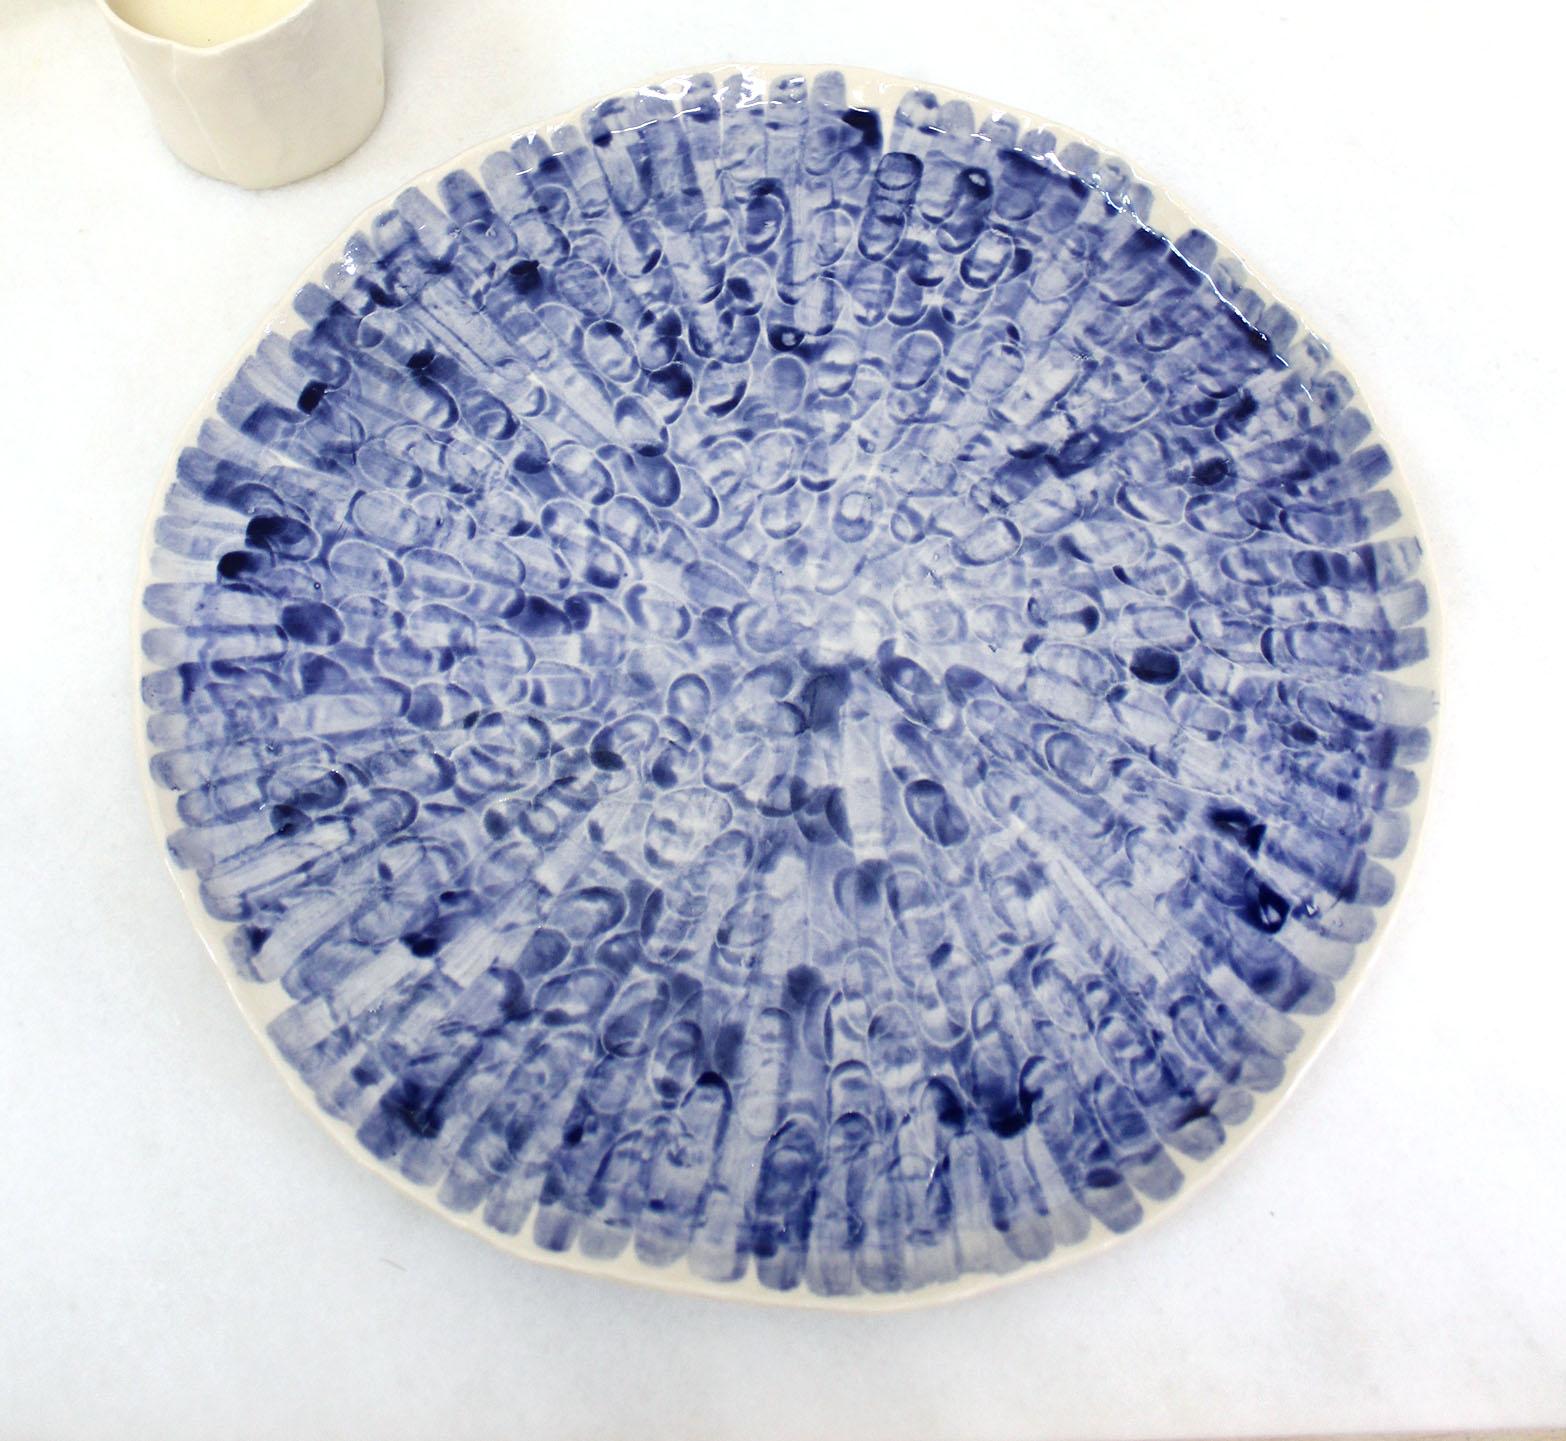 American Rhythm Platter #1 by Isabel Halley, White Porcelain with Cobalt Glaze